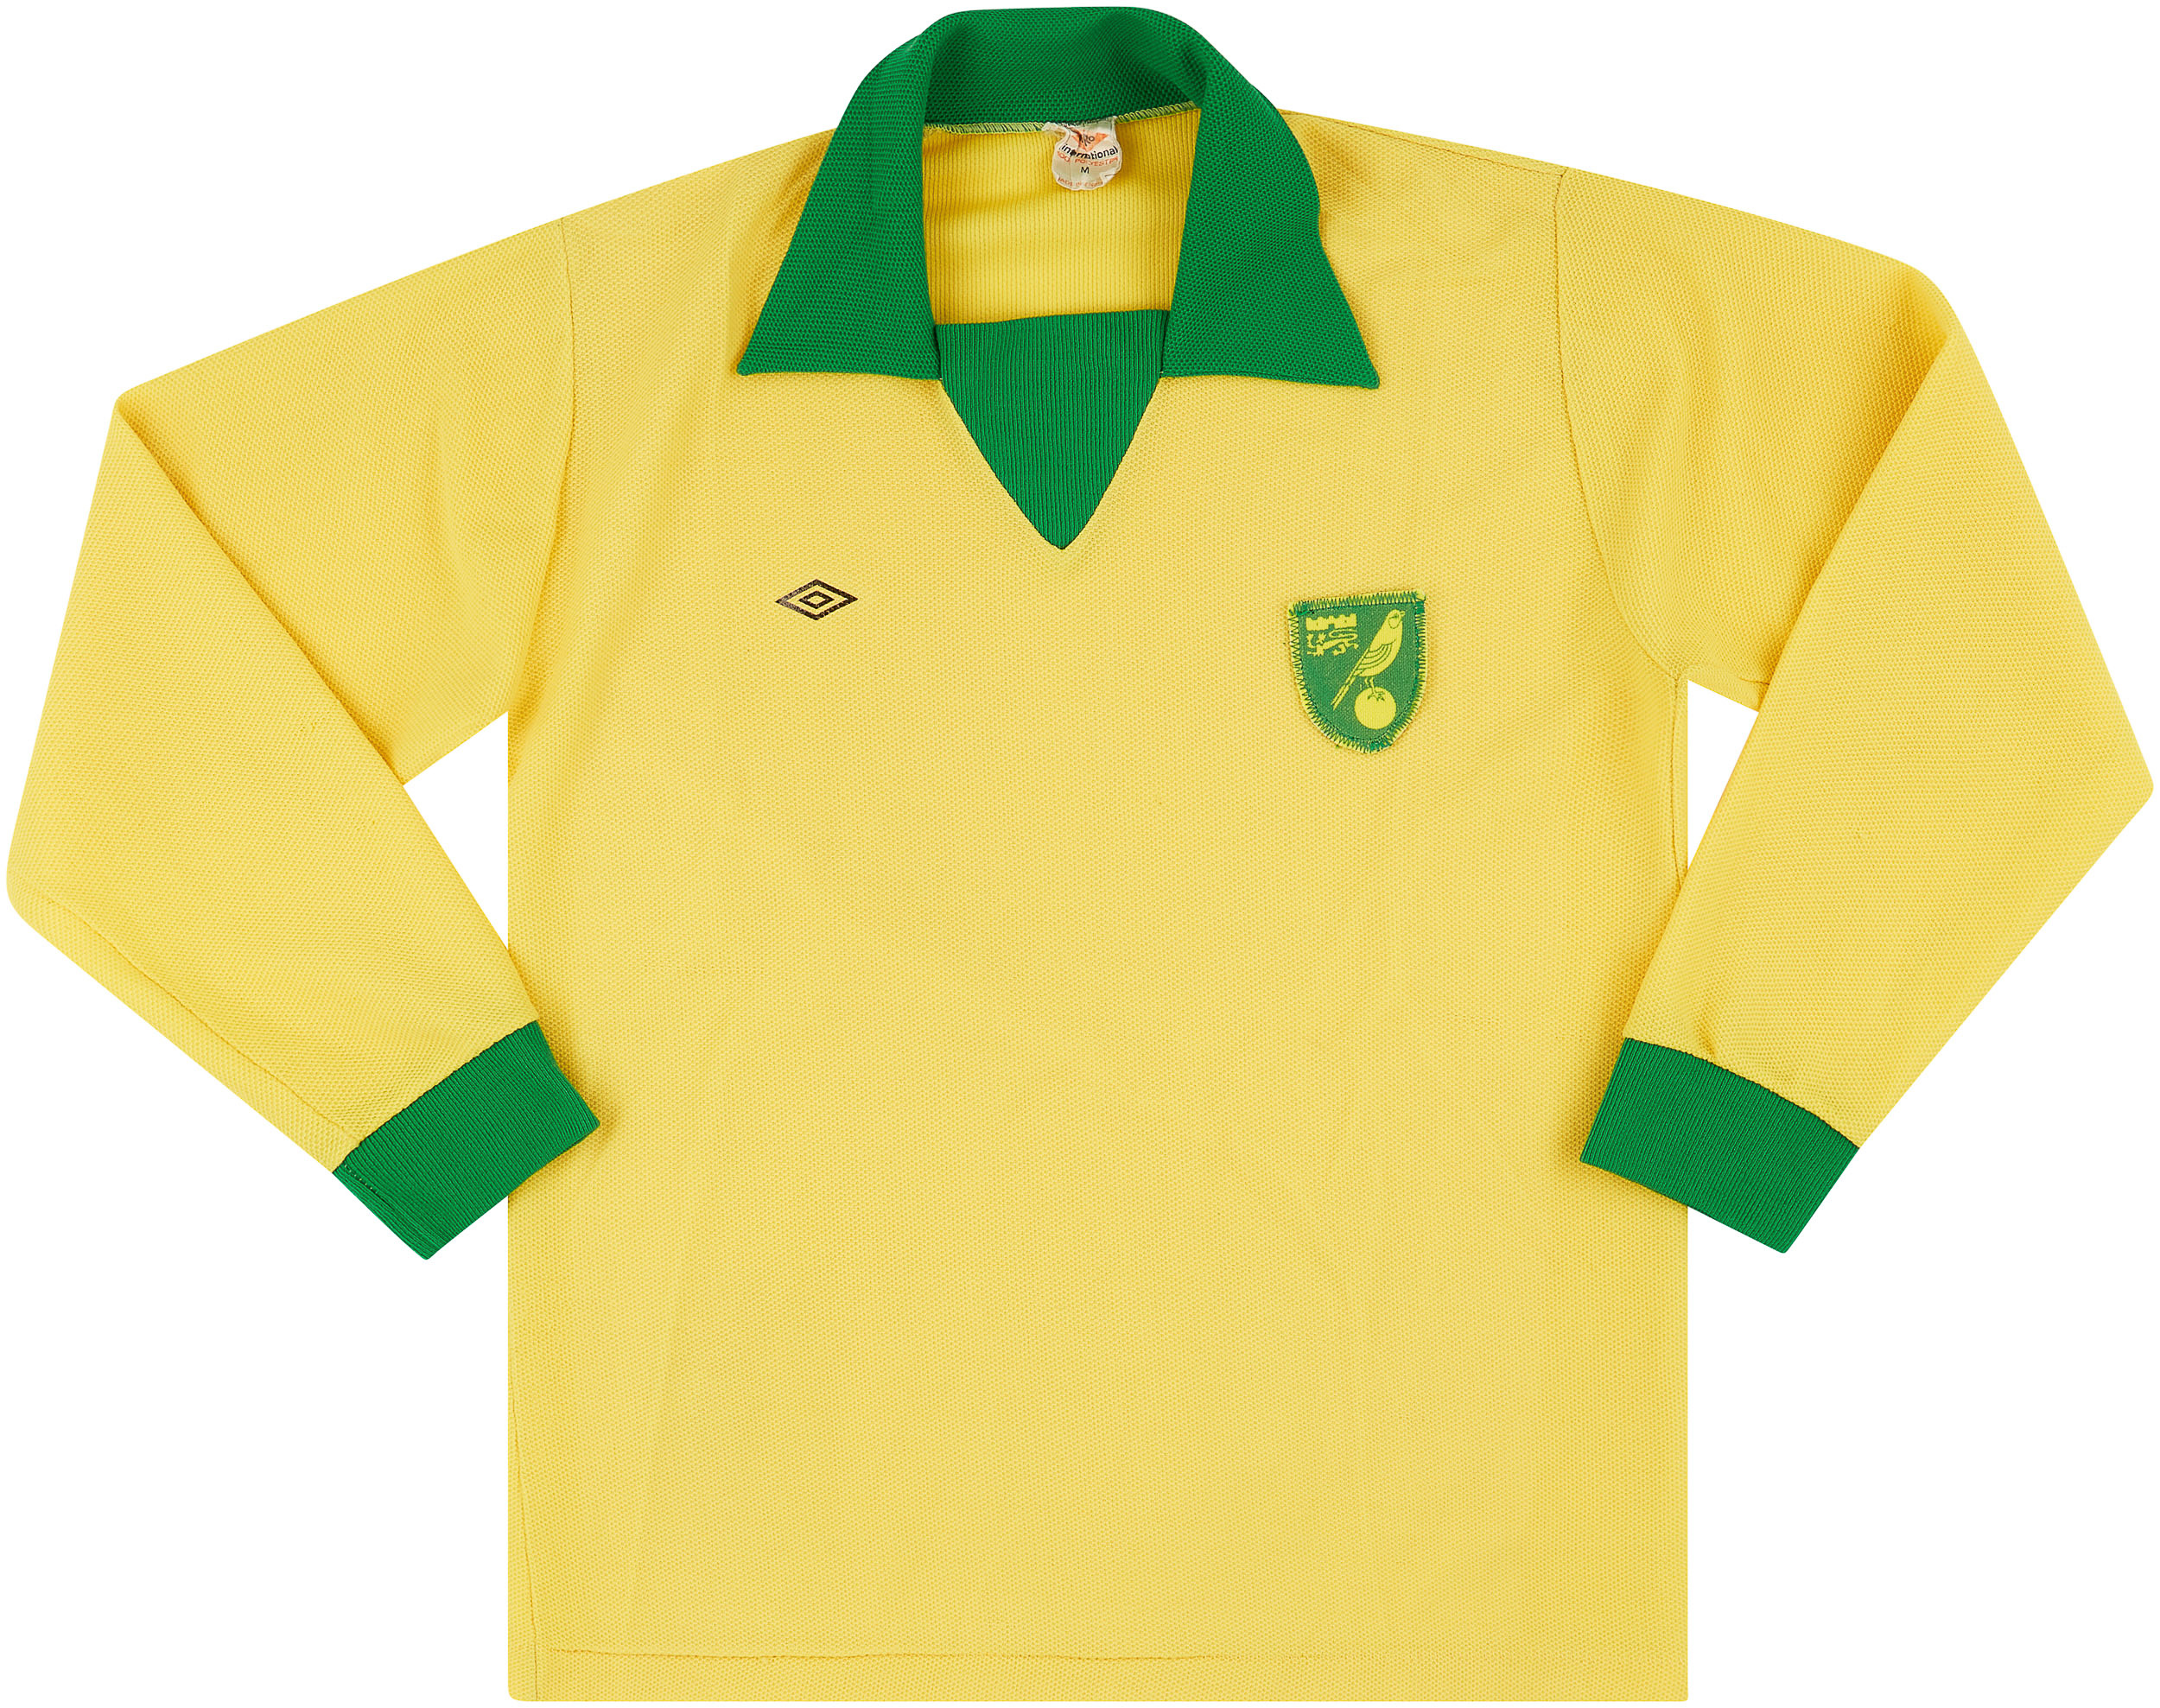 1975-76 Norwich City Home Shirt - 9/10 - ()